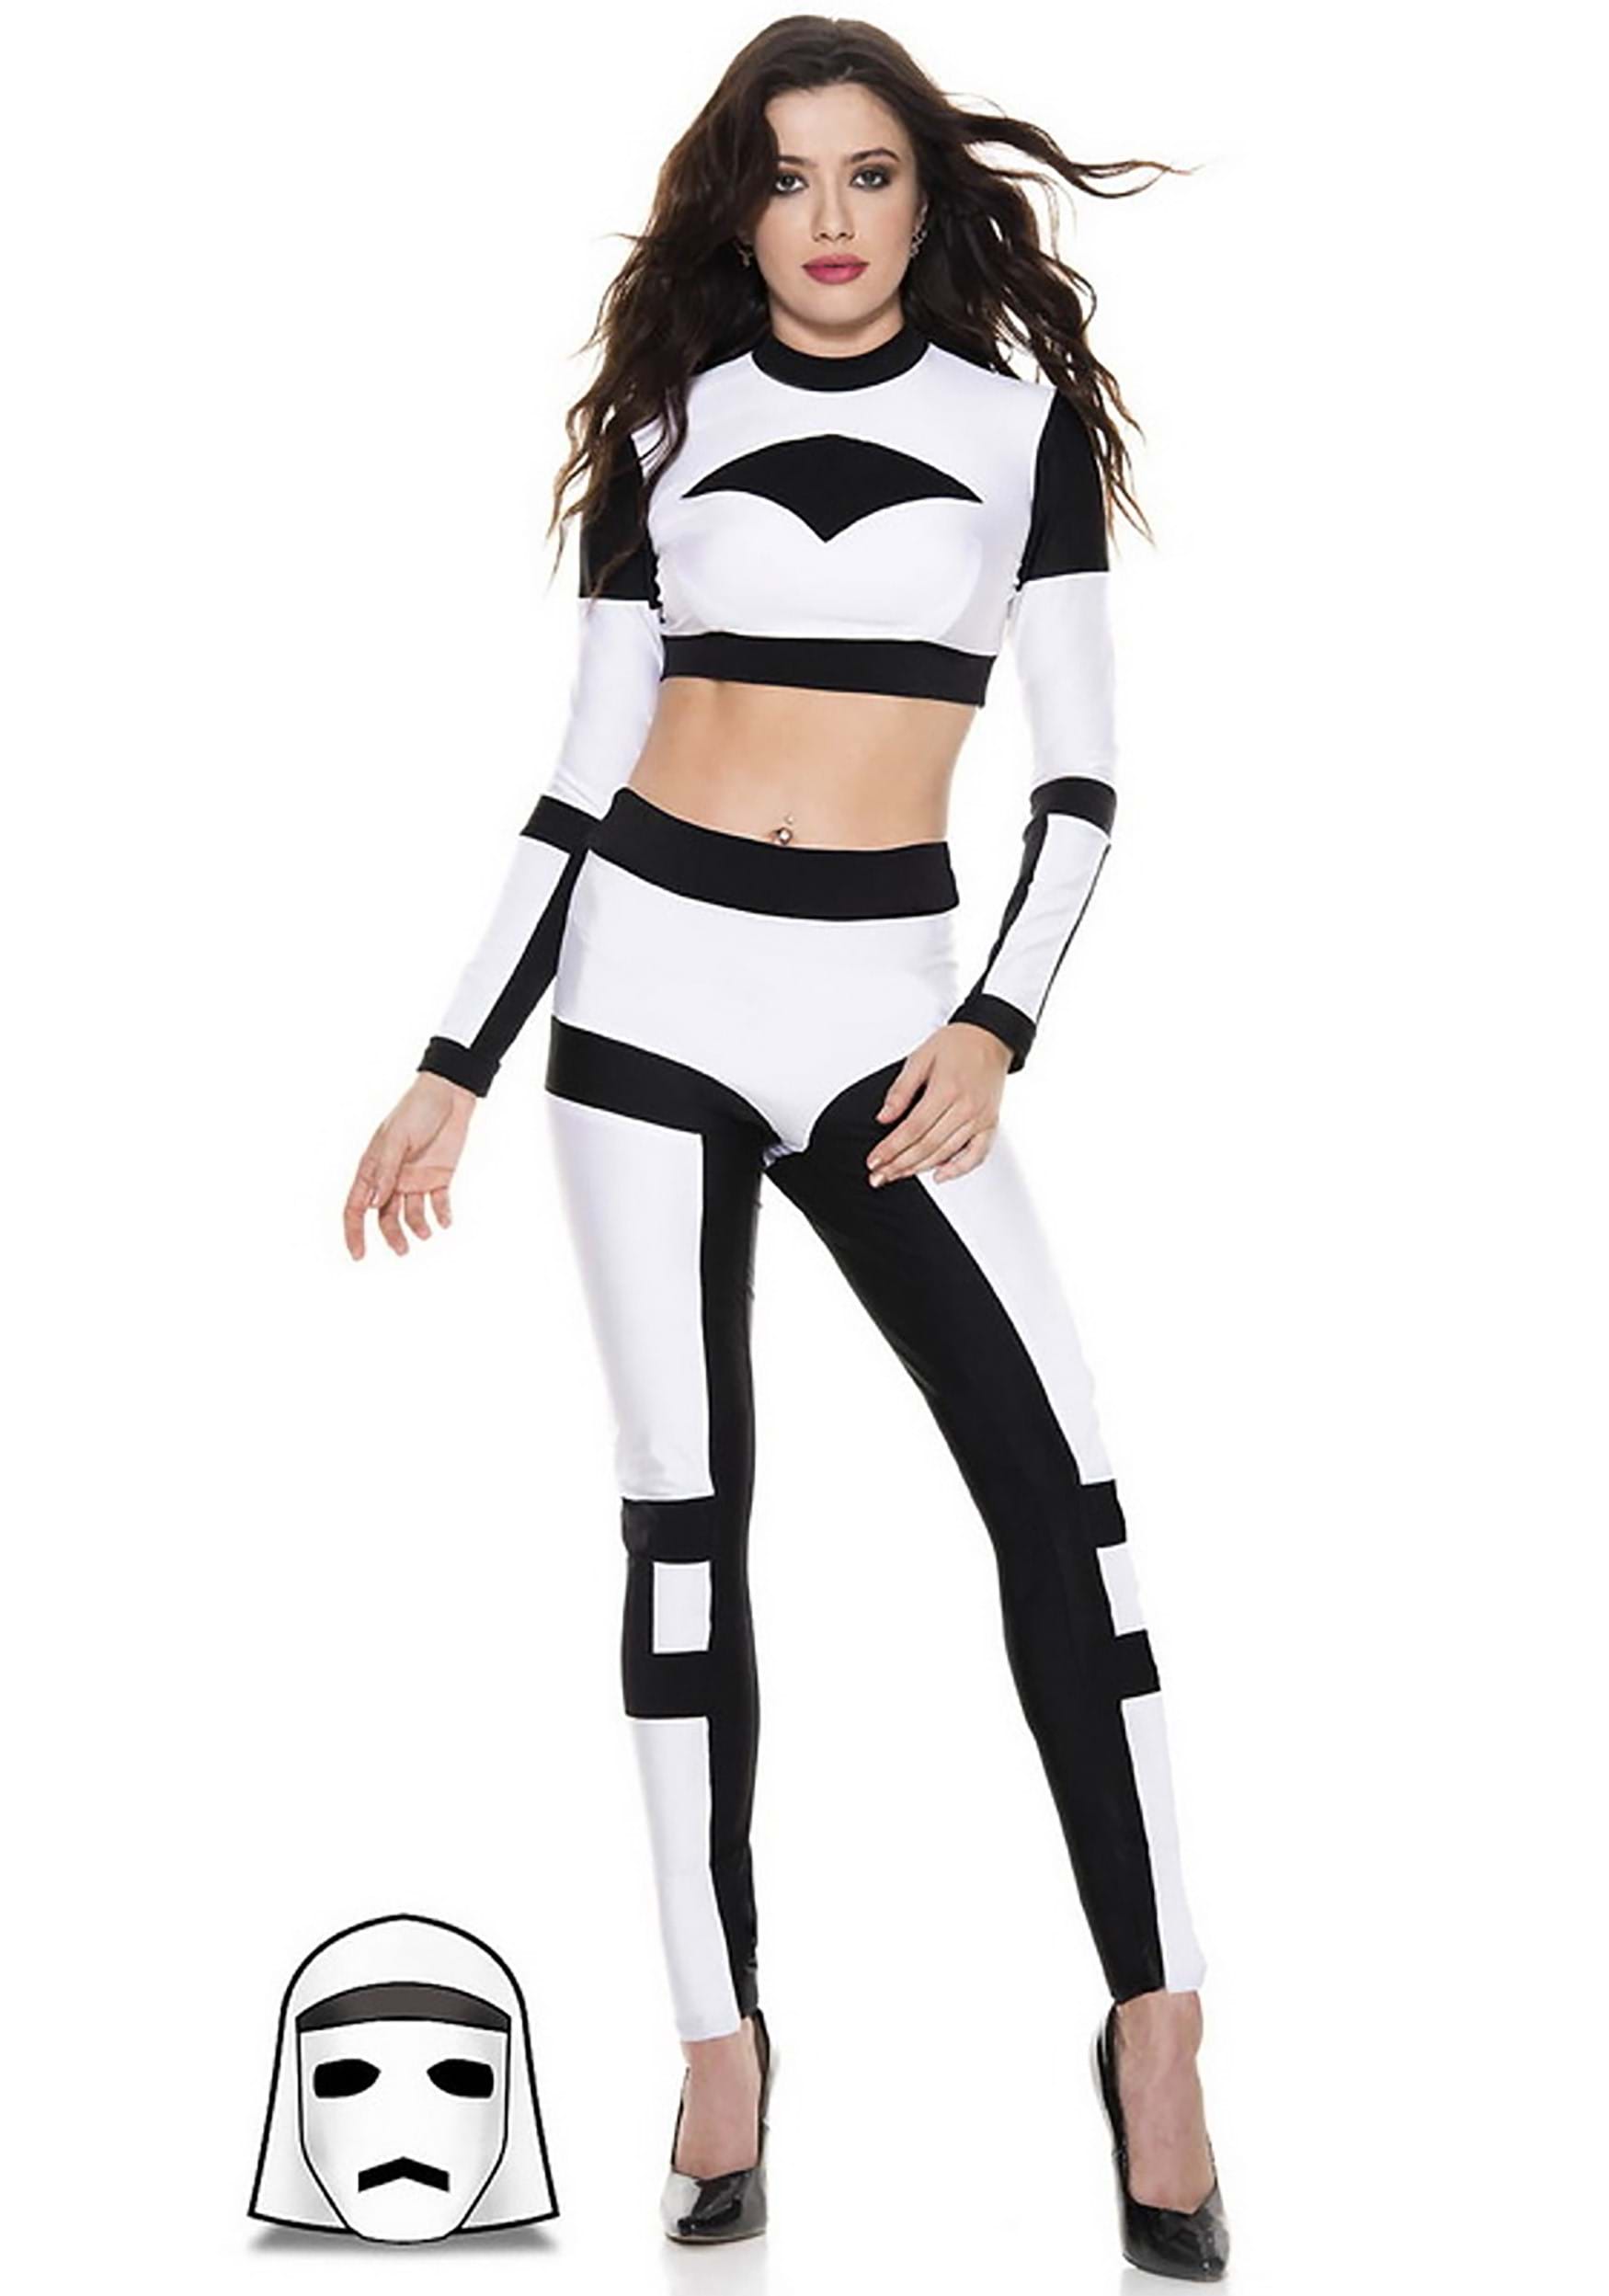 star wars stormtrooper costume women